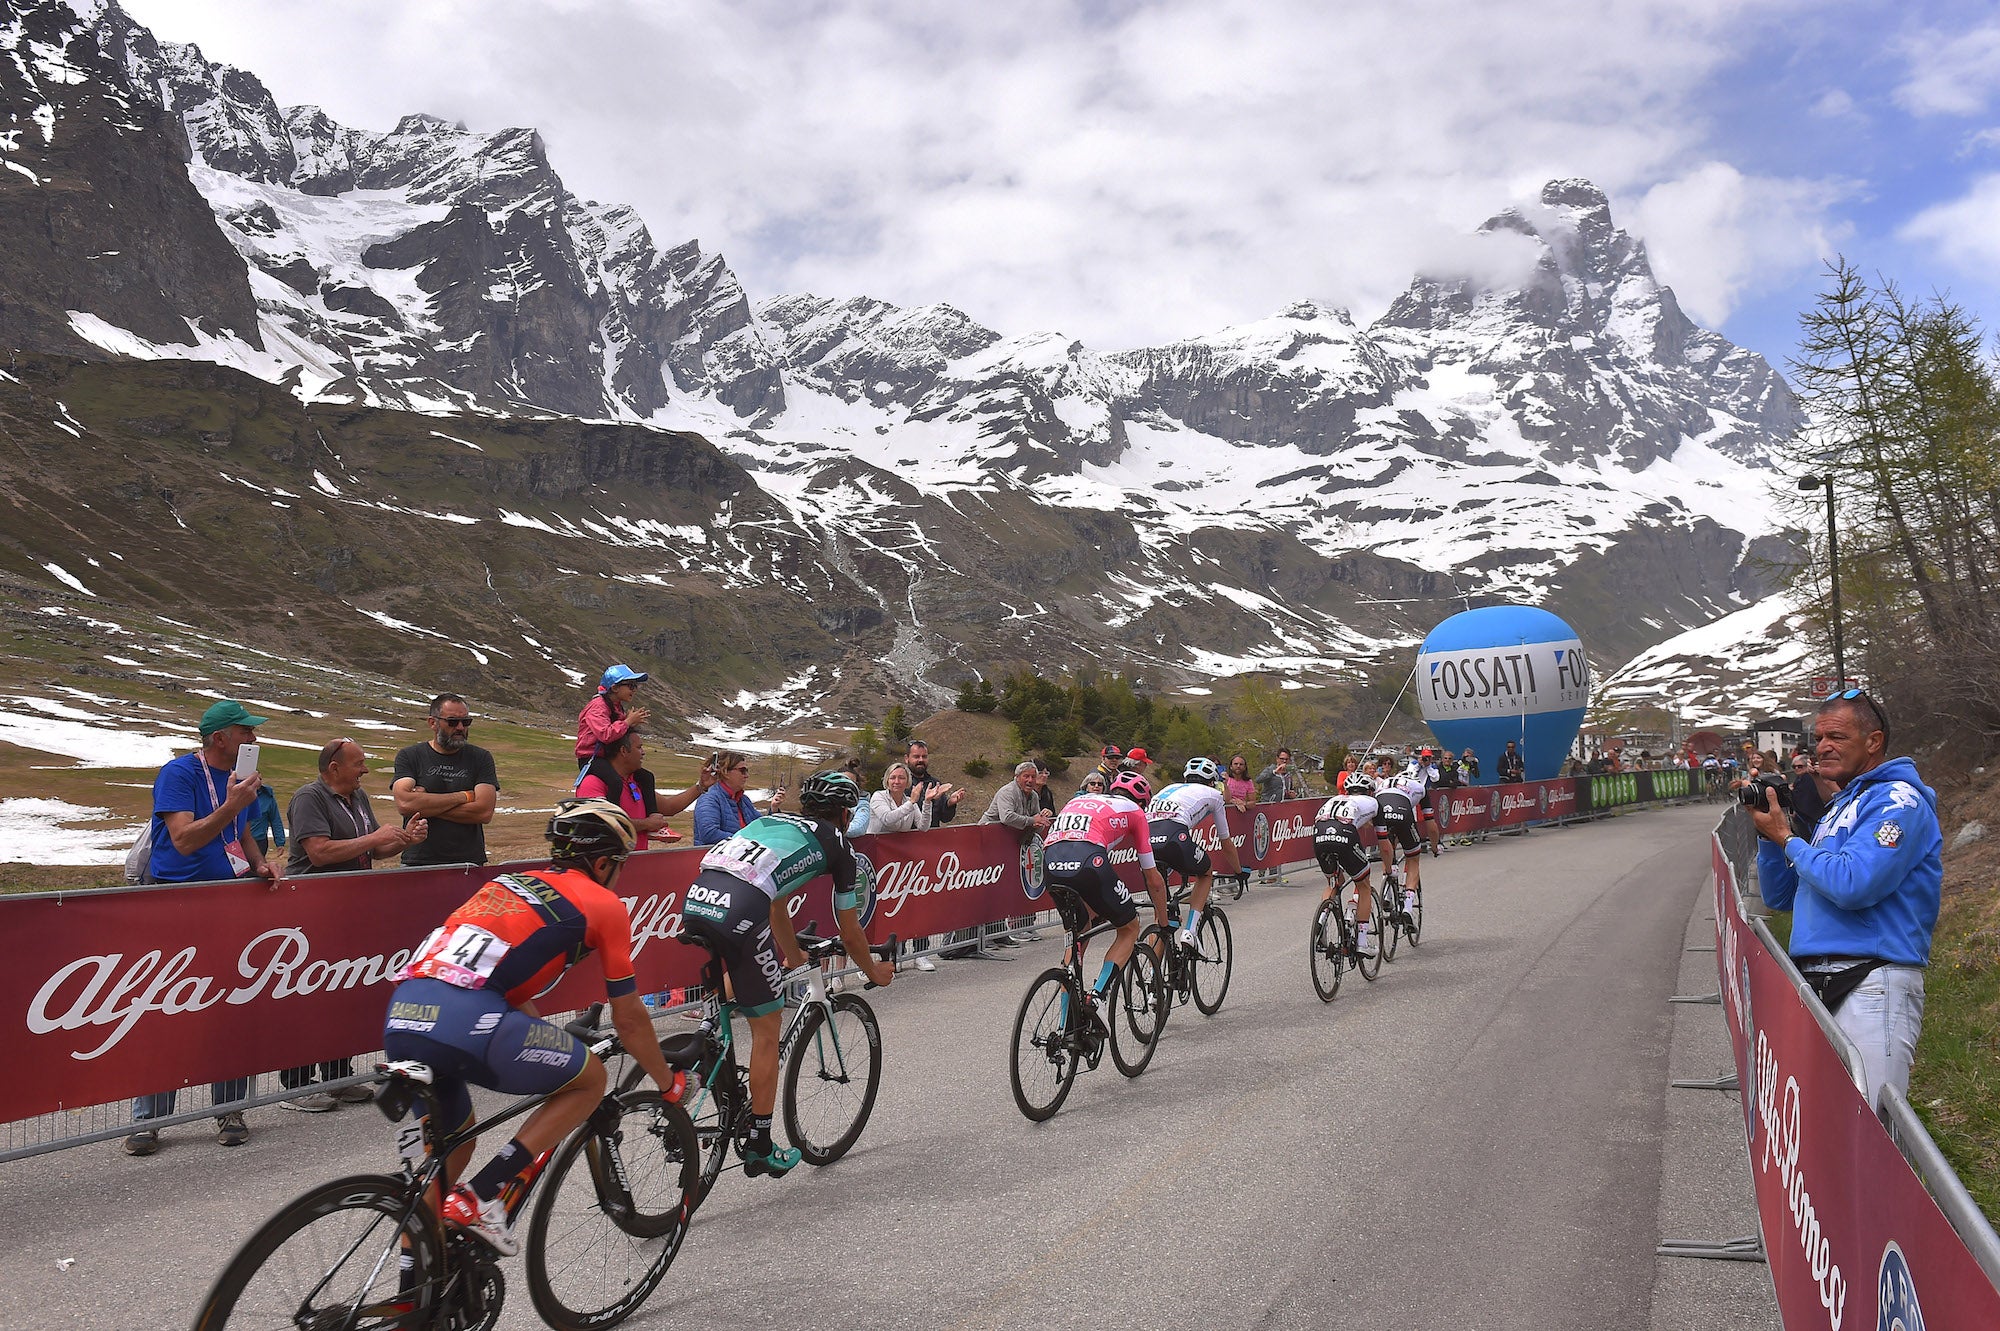 Where to watch the Giro dItalia this year